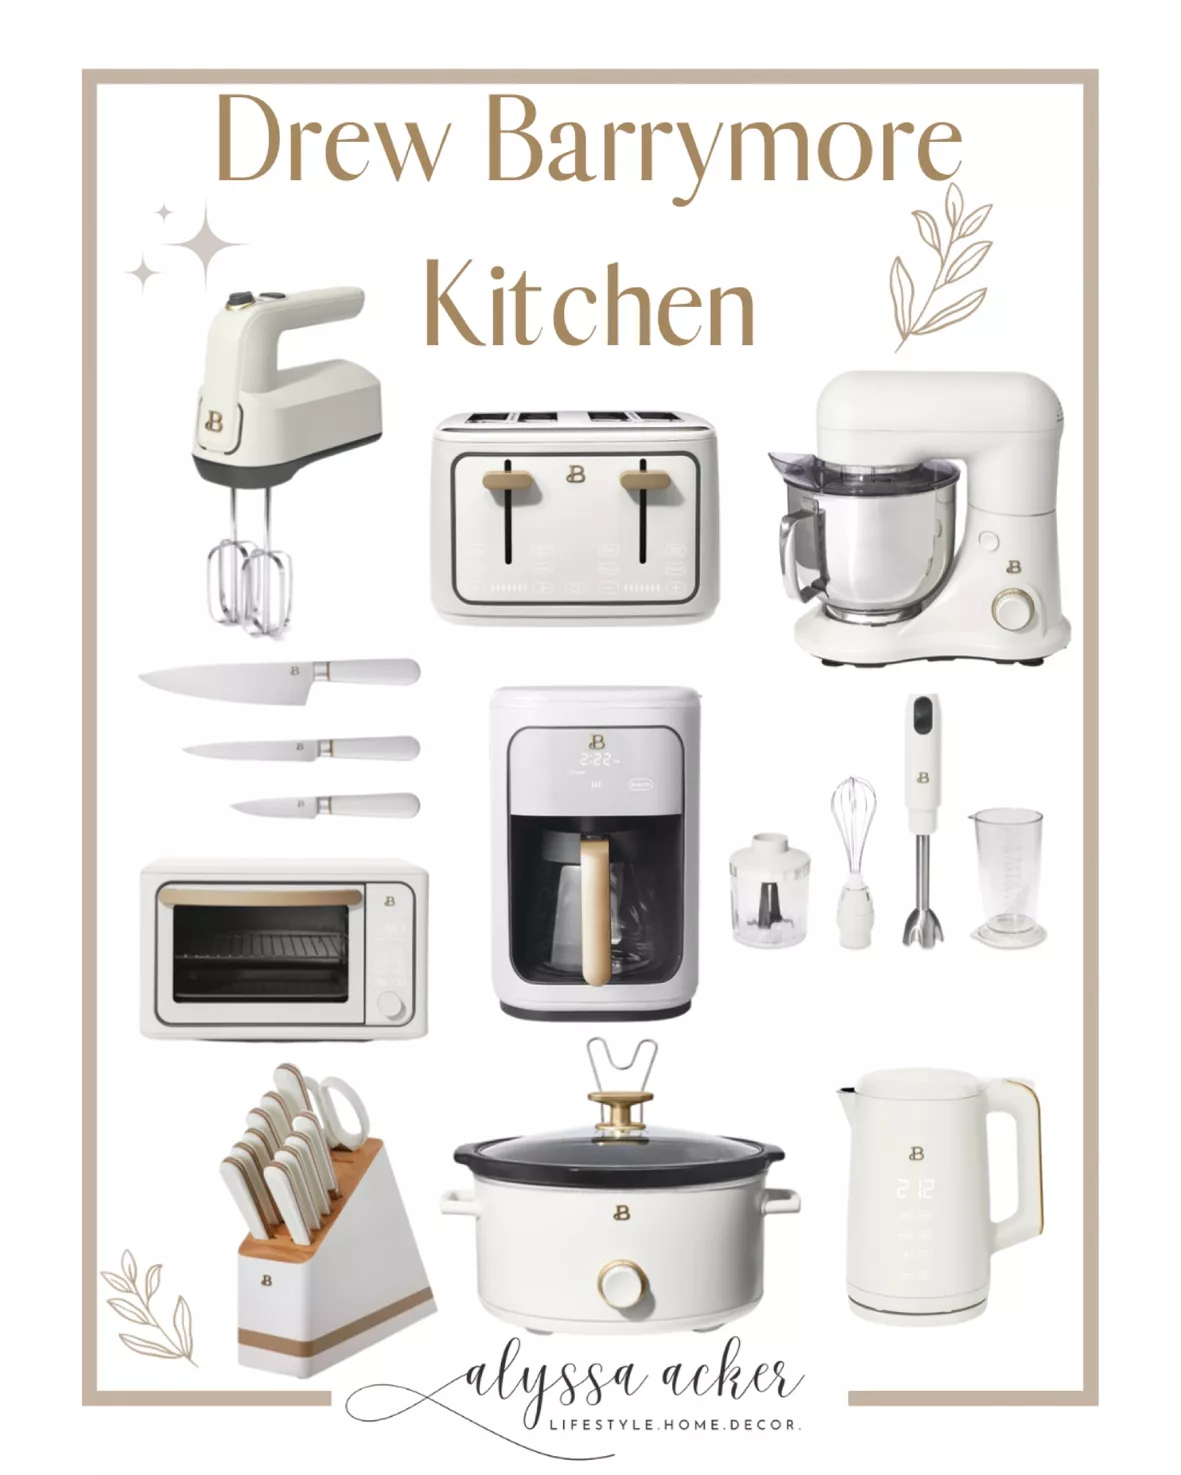 Beautiful by Drew Barrymore Kitchen Appliances in Kitchen